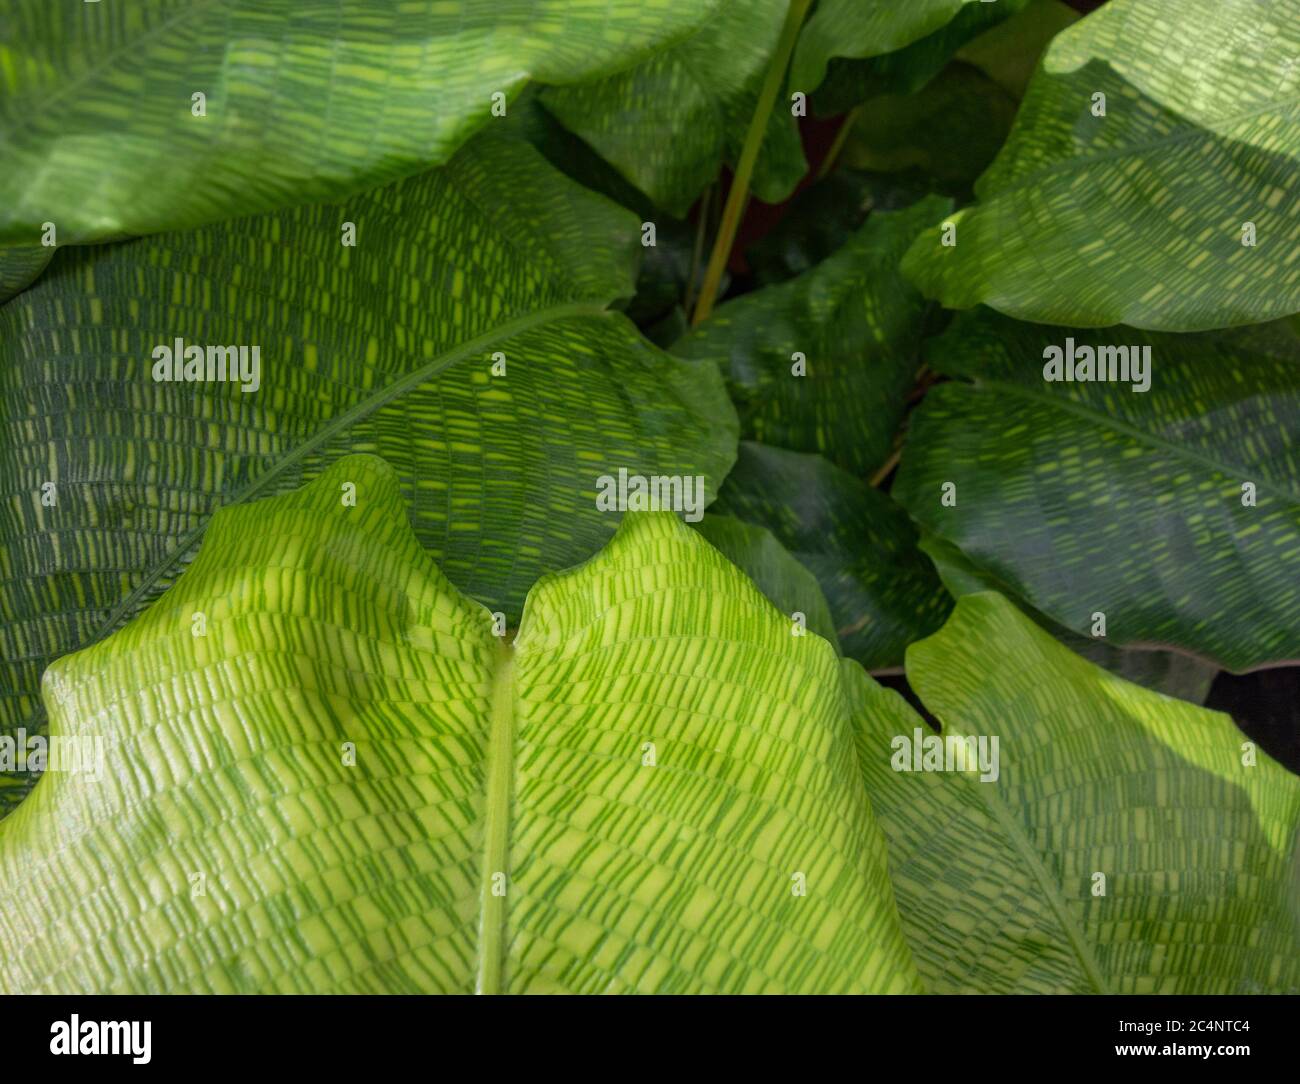 closeup shot showing some green Maranta plant leaves Stock Photo